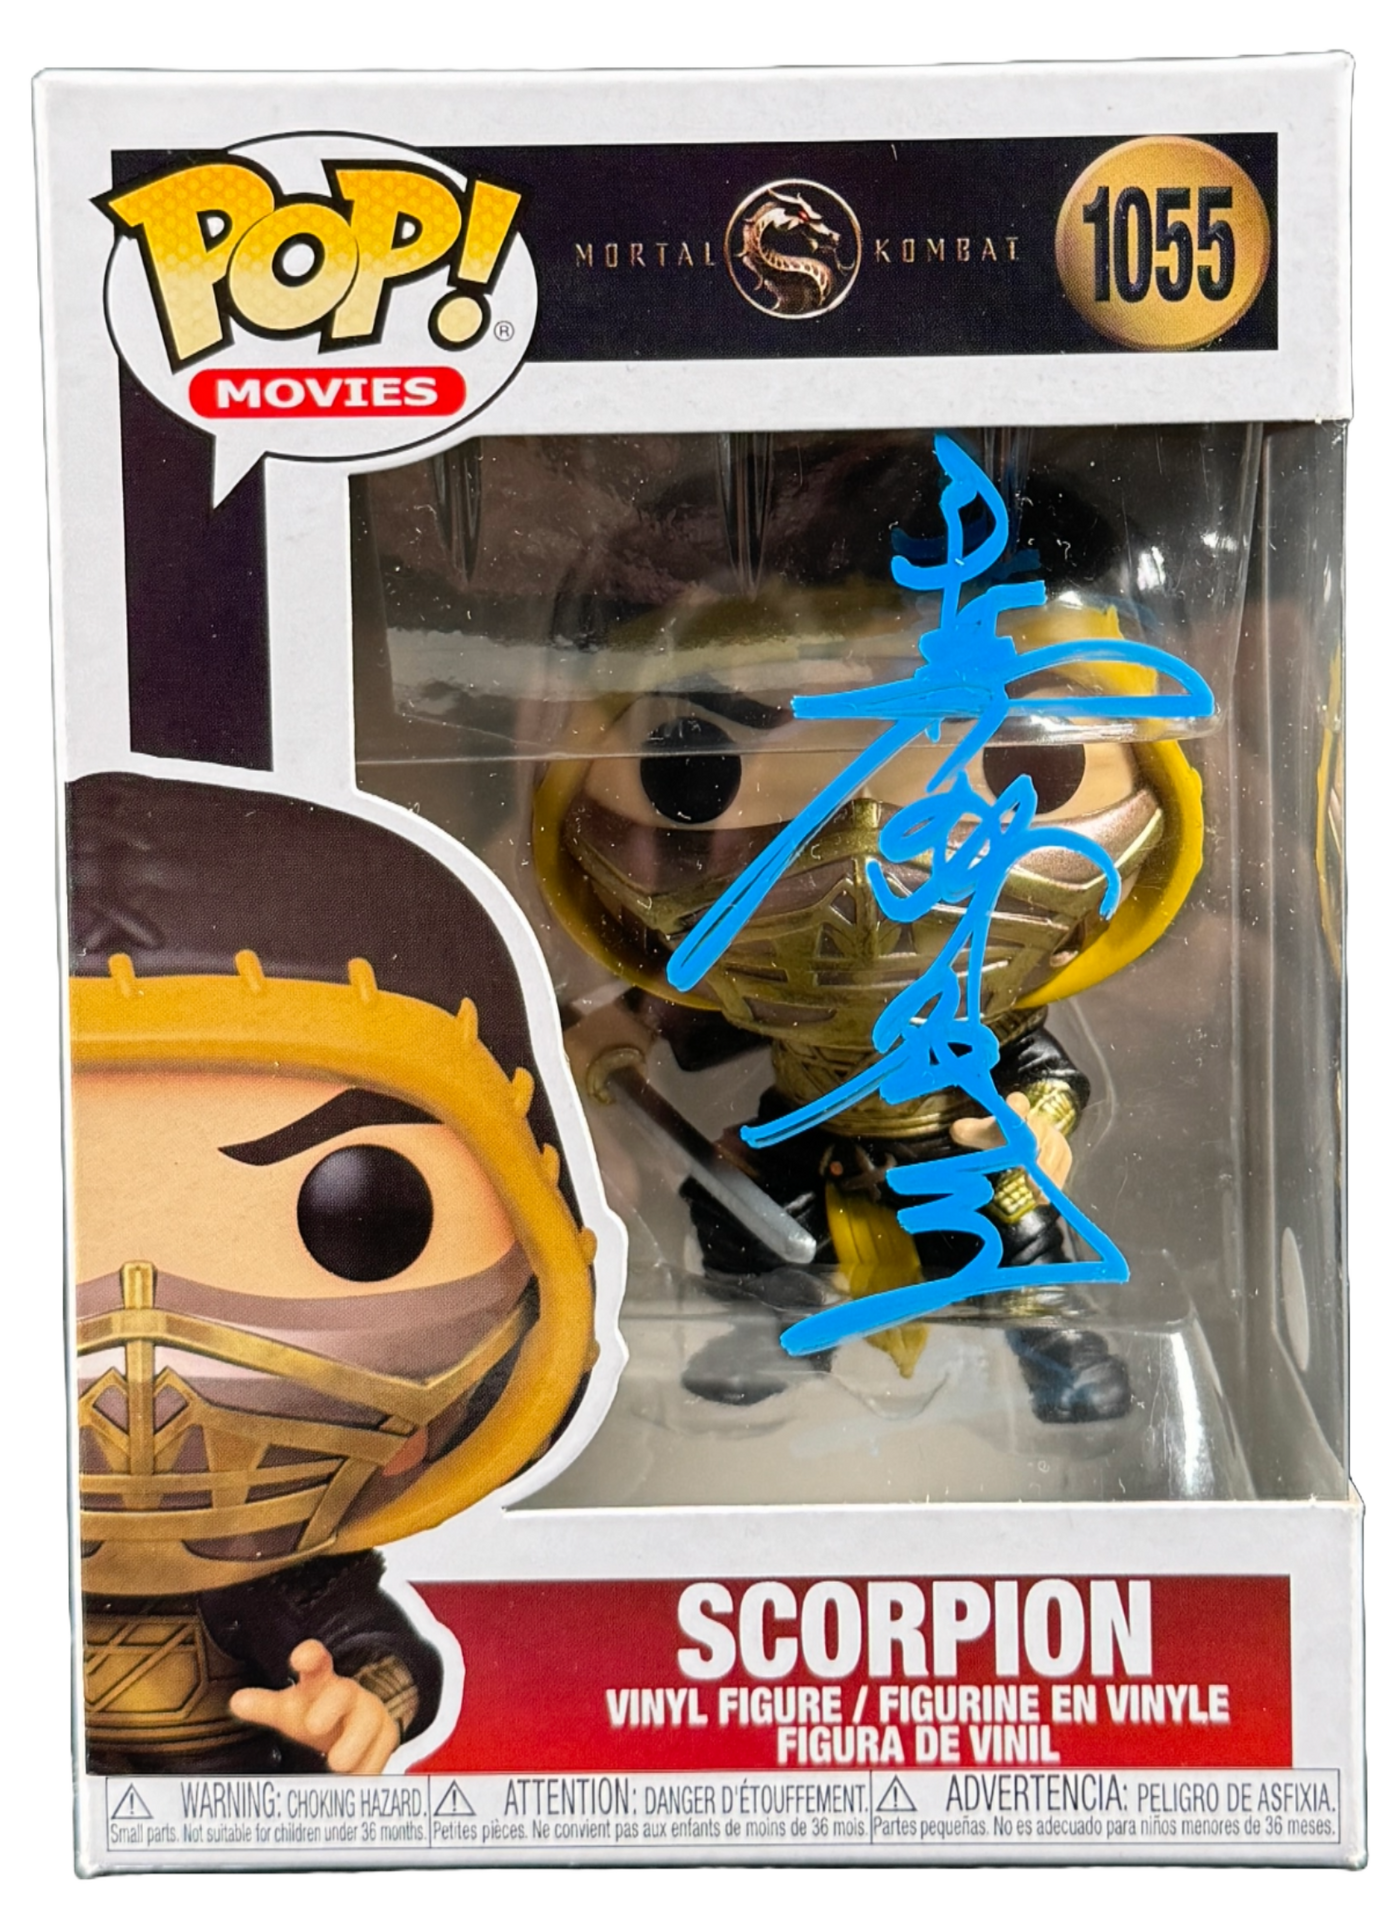 Hiroyuki Sanada "Scorpion" Signed Funko Pop #1055 Mortal Kombat Autographed JSA COA